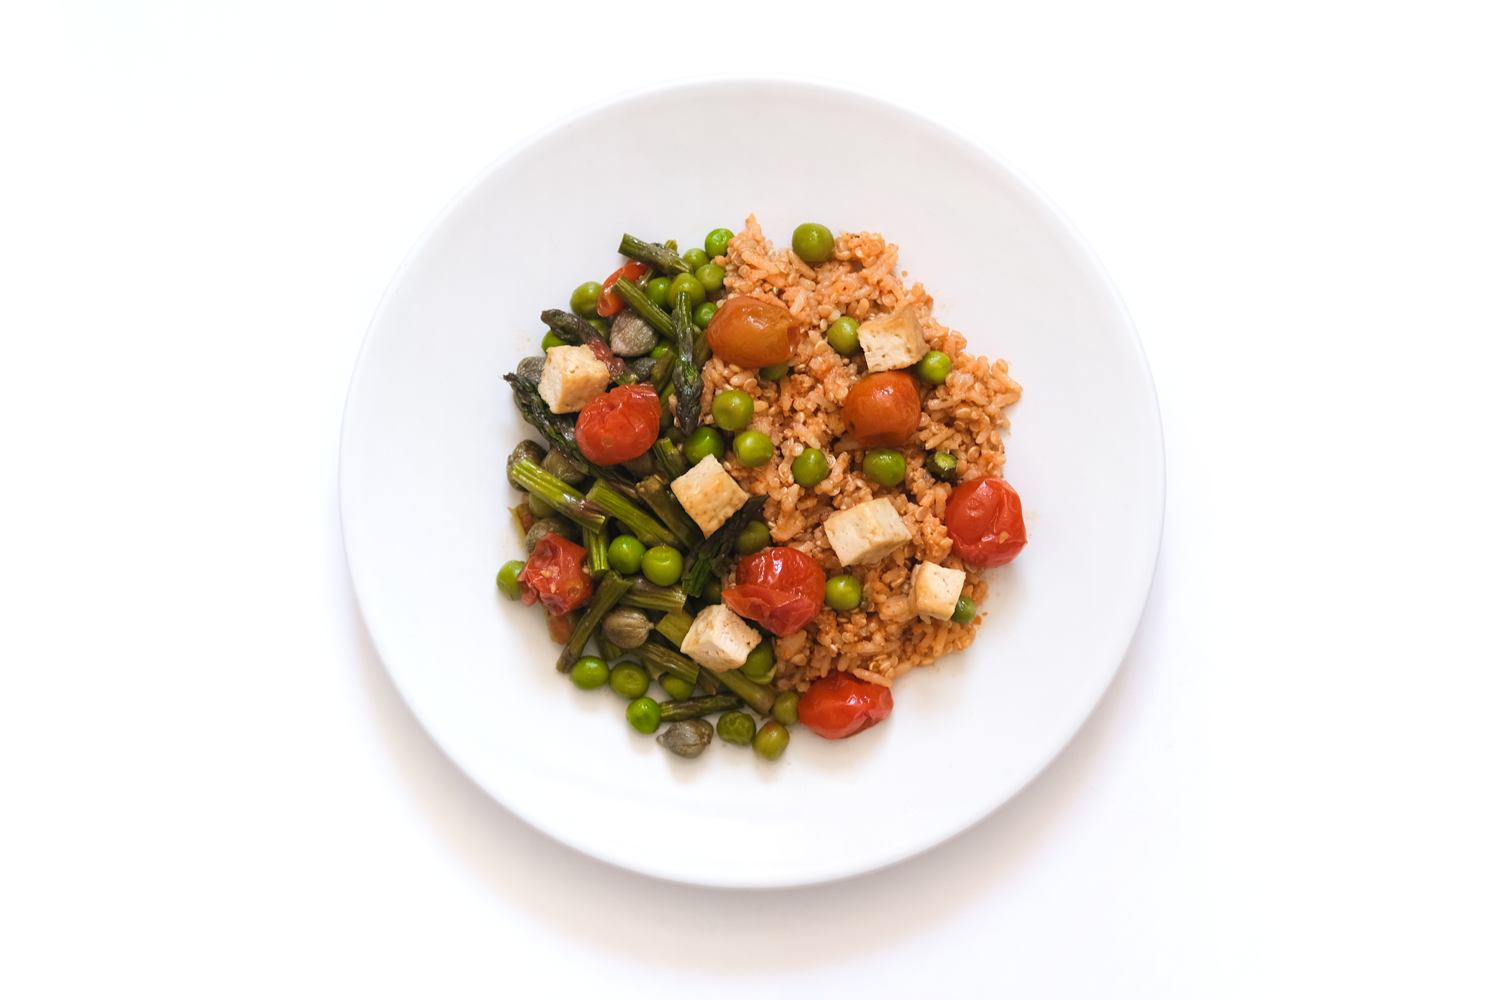 162_Rice and quinoa salad with pesto and tofu